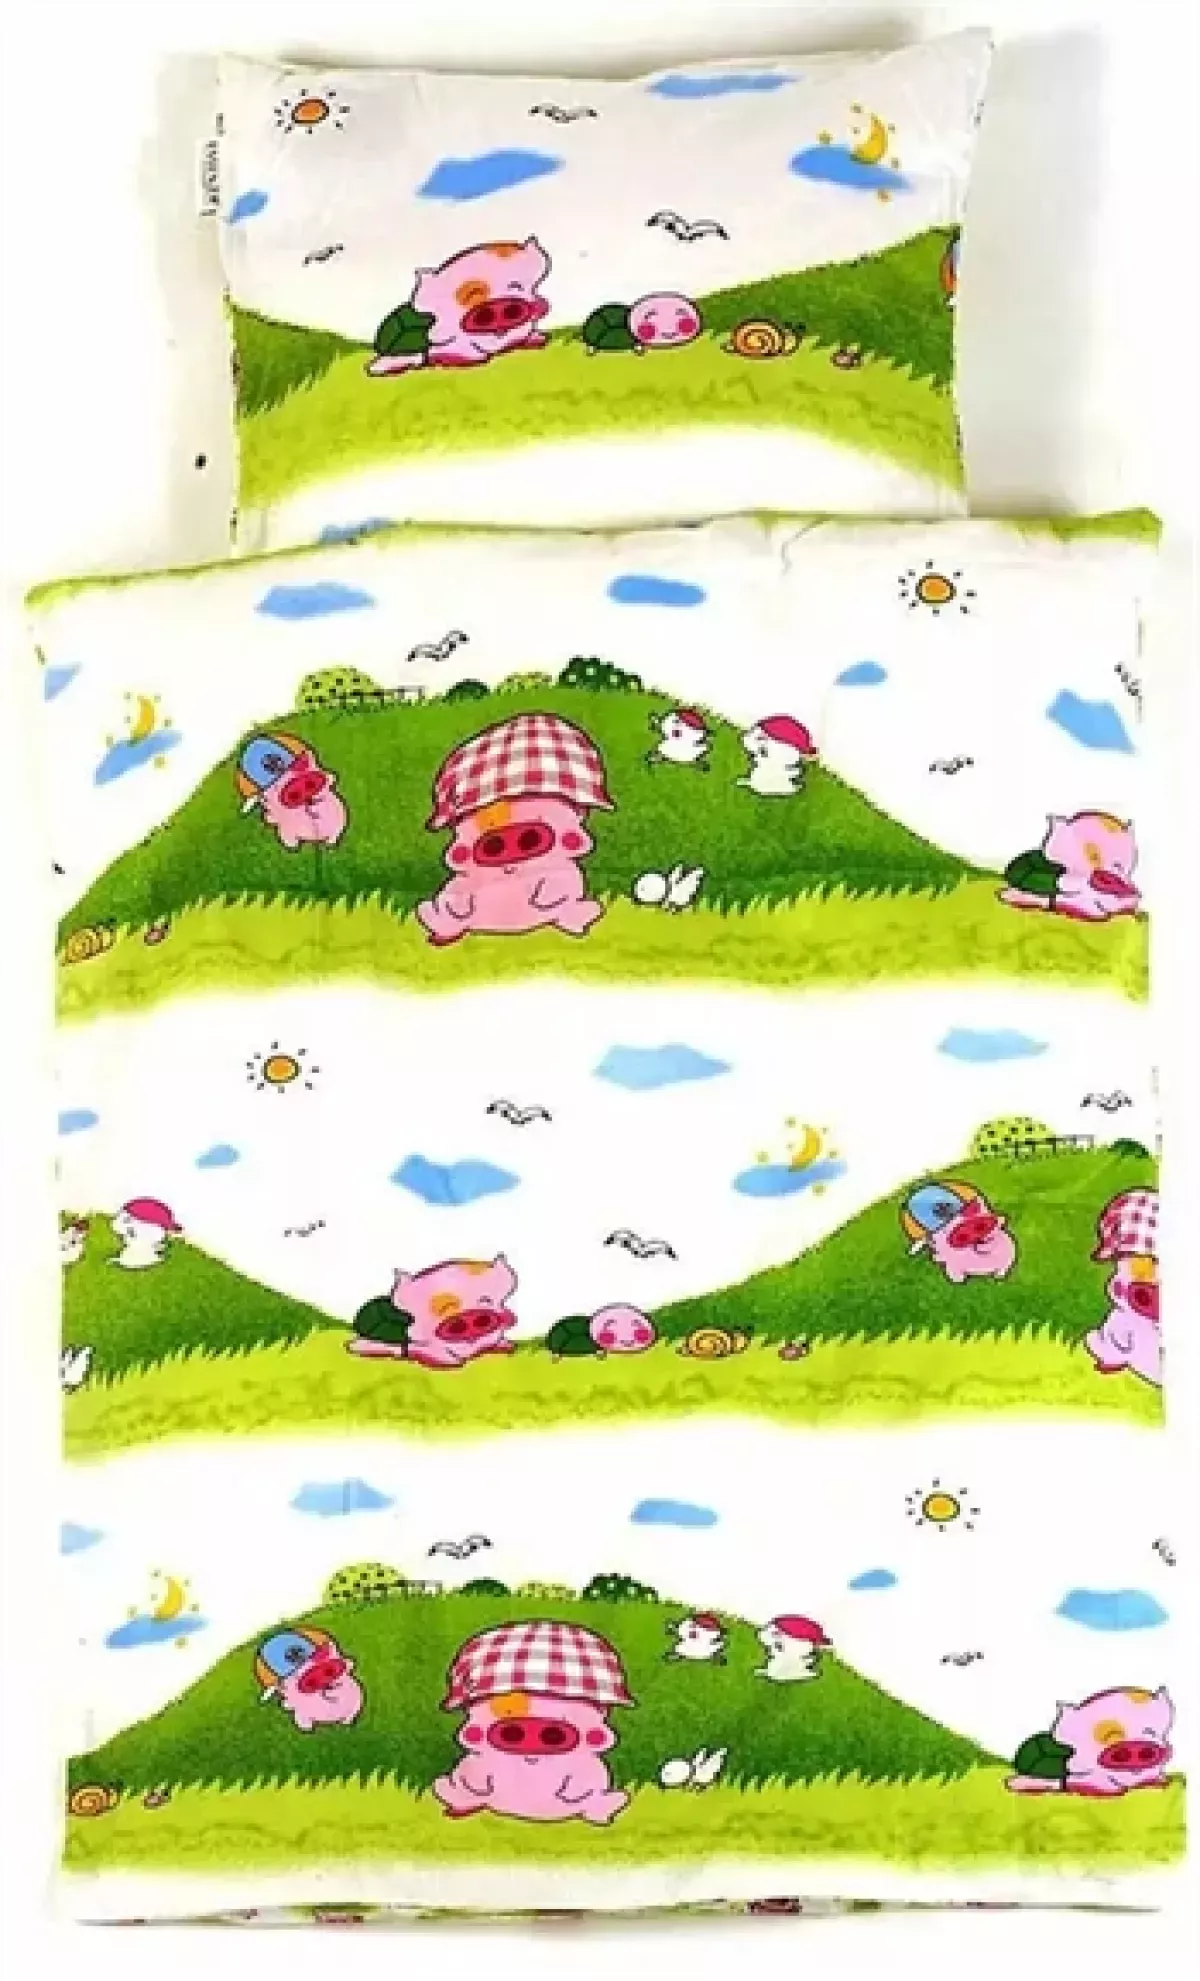 #1 - Junior sengetøj 100x140 cm - Lille pink gris - 100% bomuld - Essenza junior sengesæt